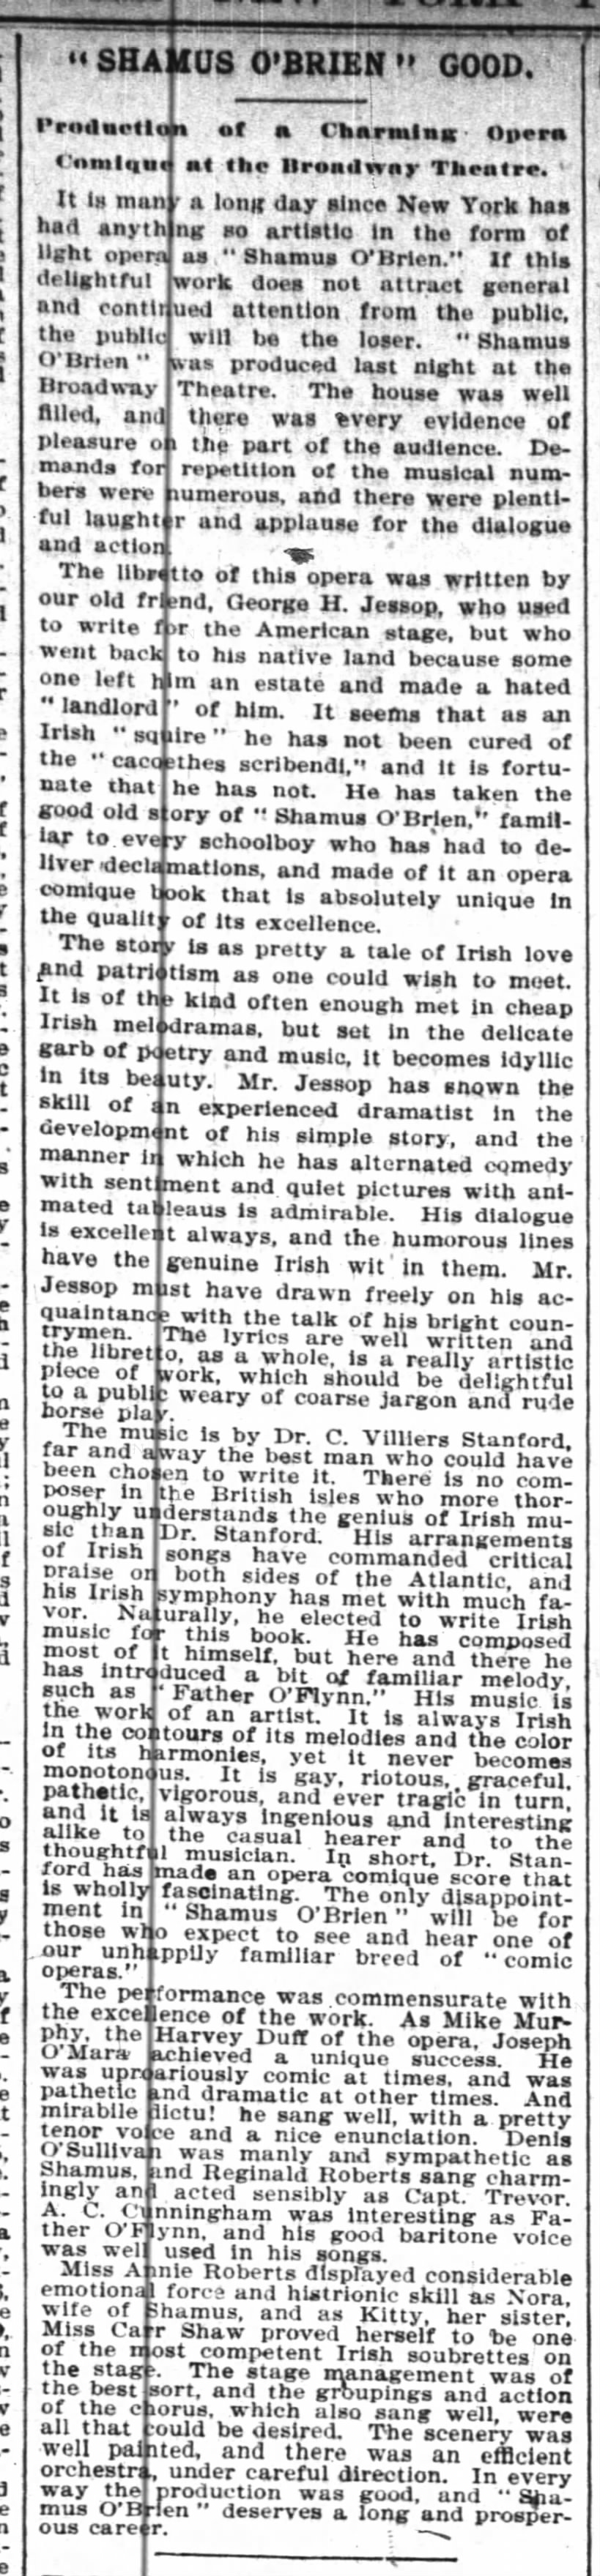 "Shamus O'Brien Good" NY Times 6 Jan 1897